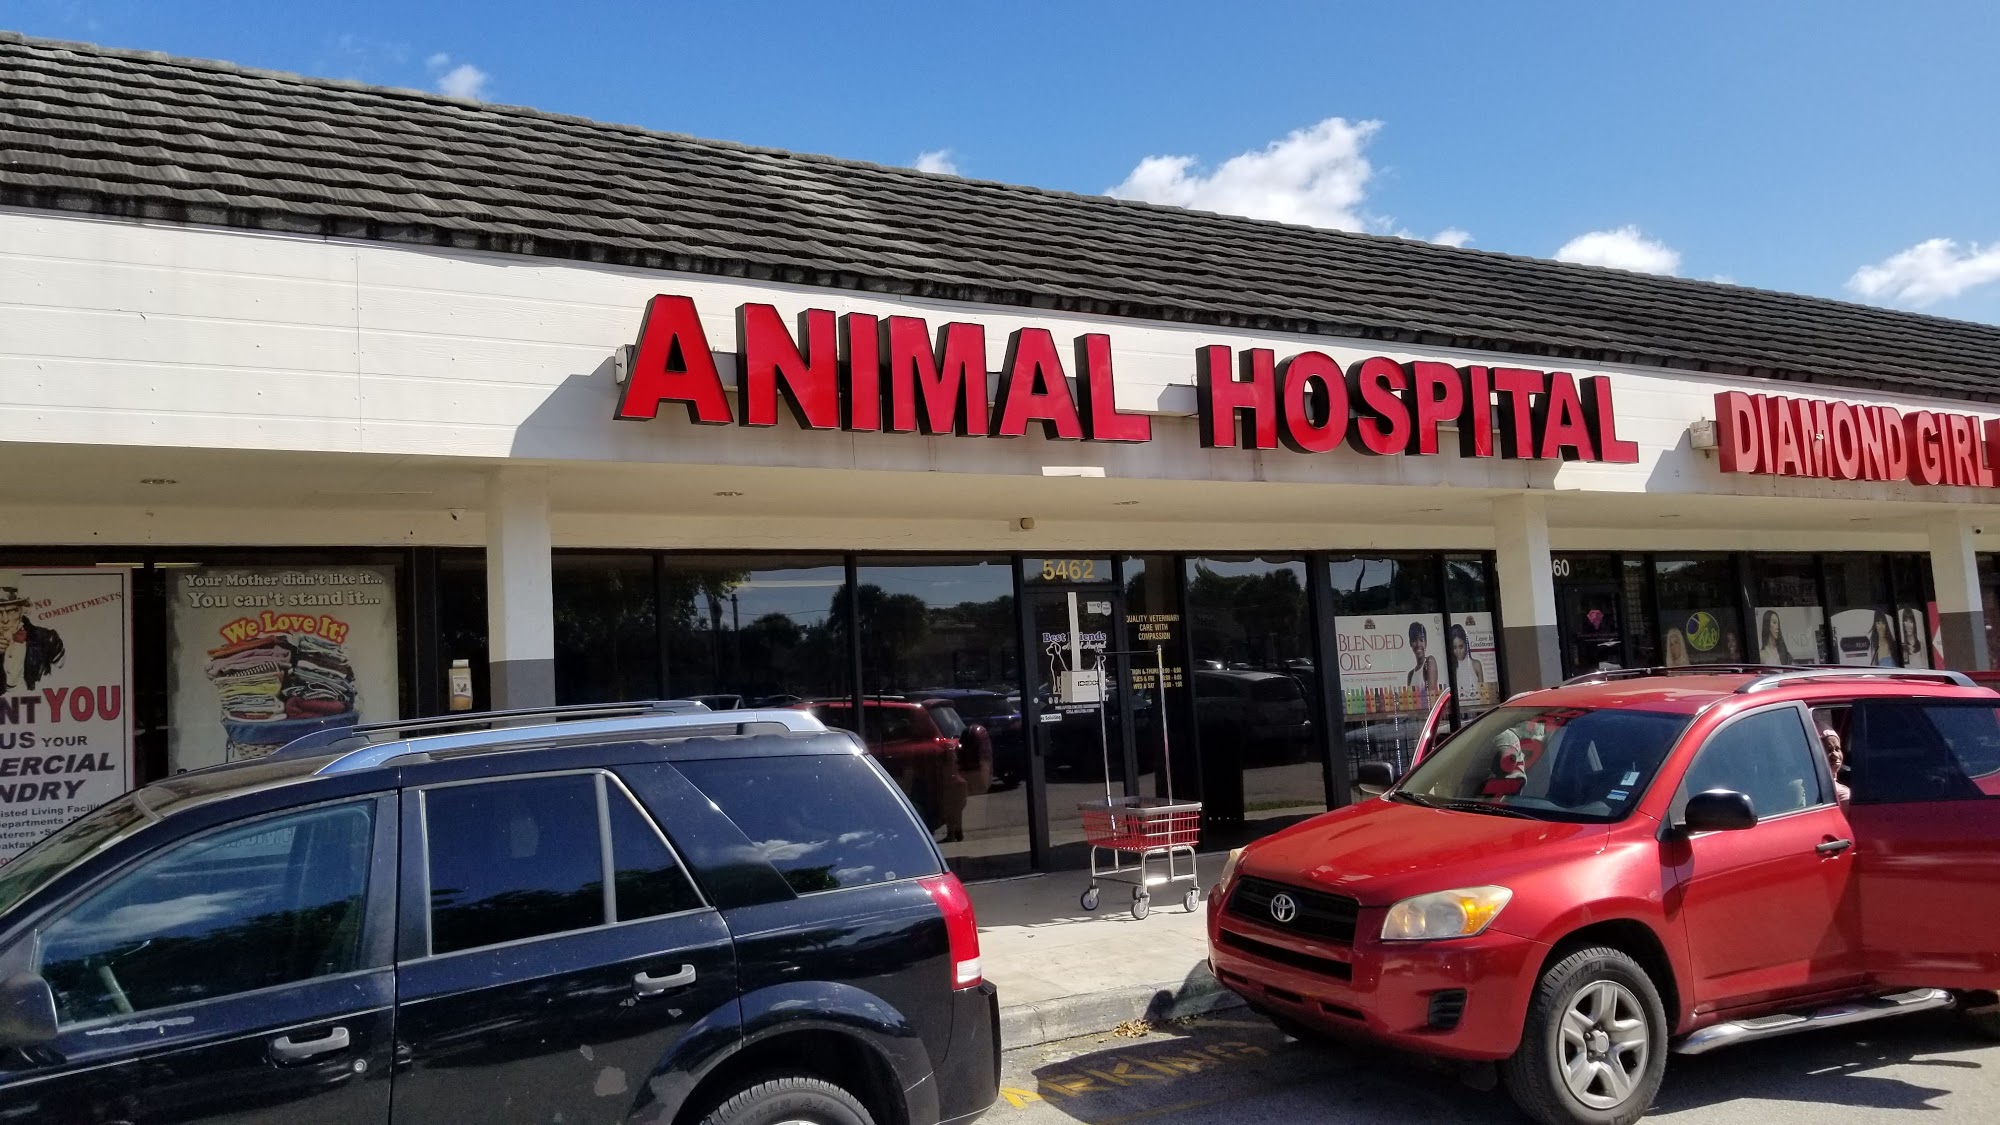 Best Friends Animal Hospital